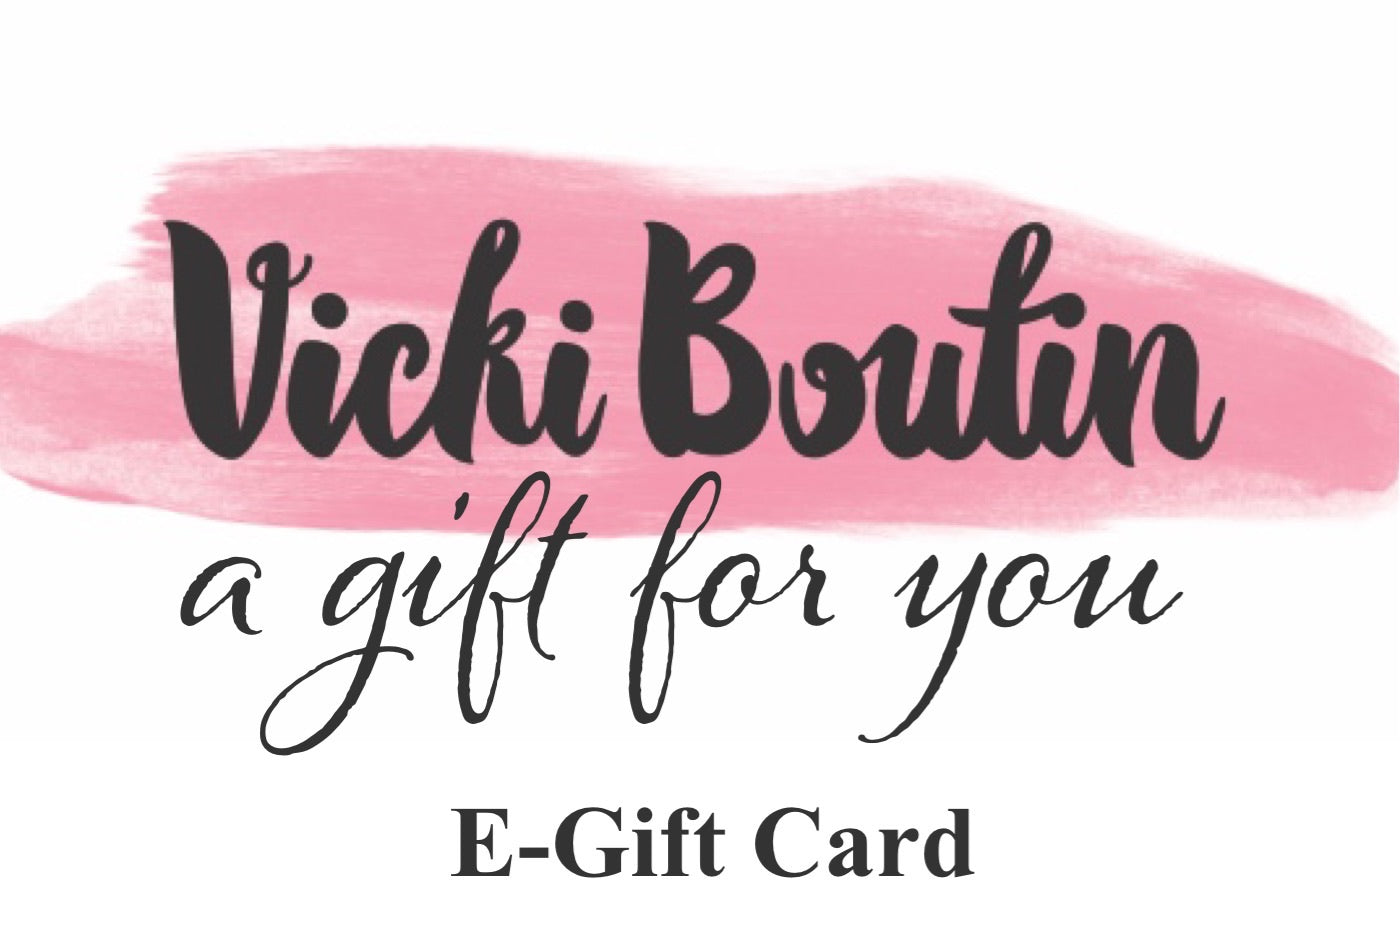 Vicki Boutin E-Gift Card